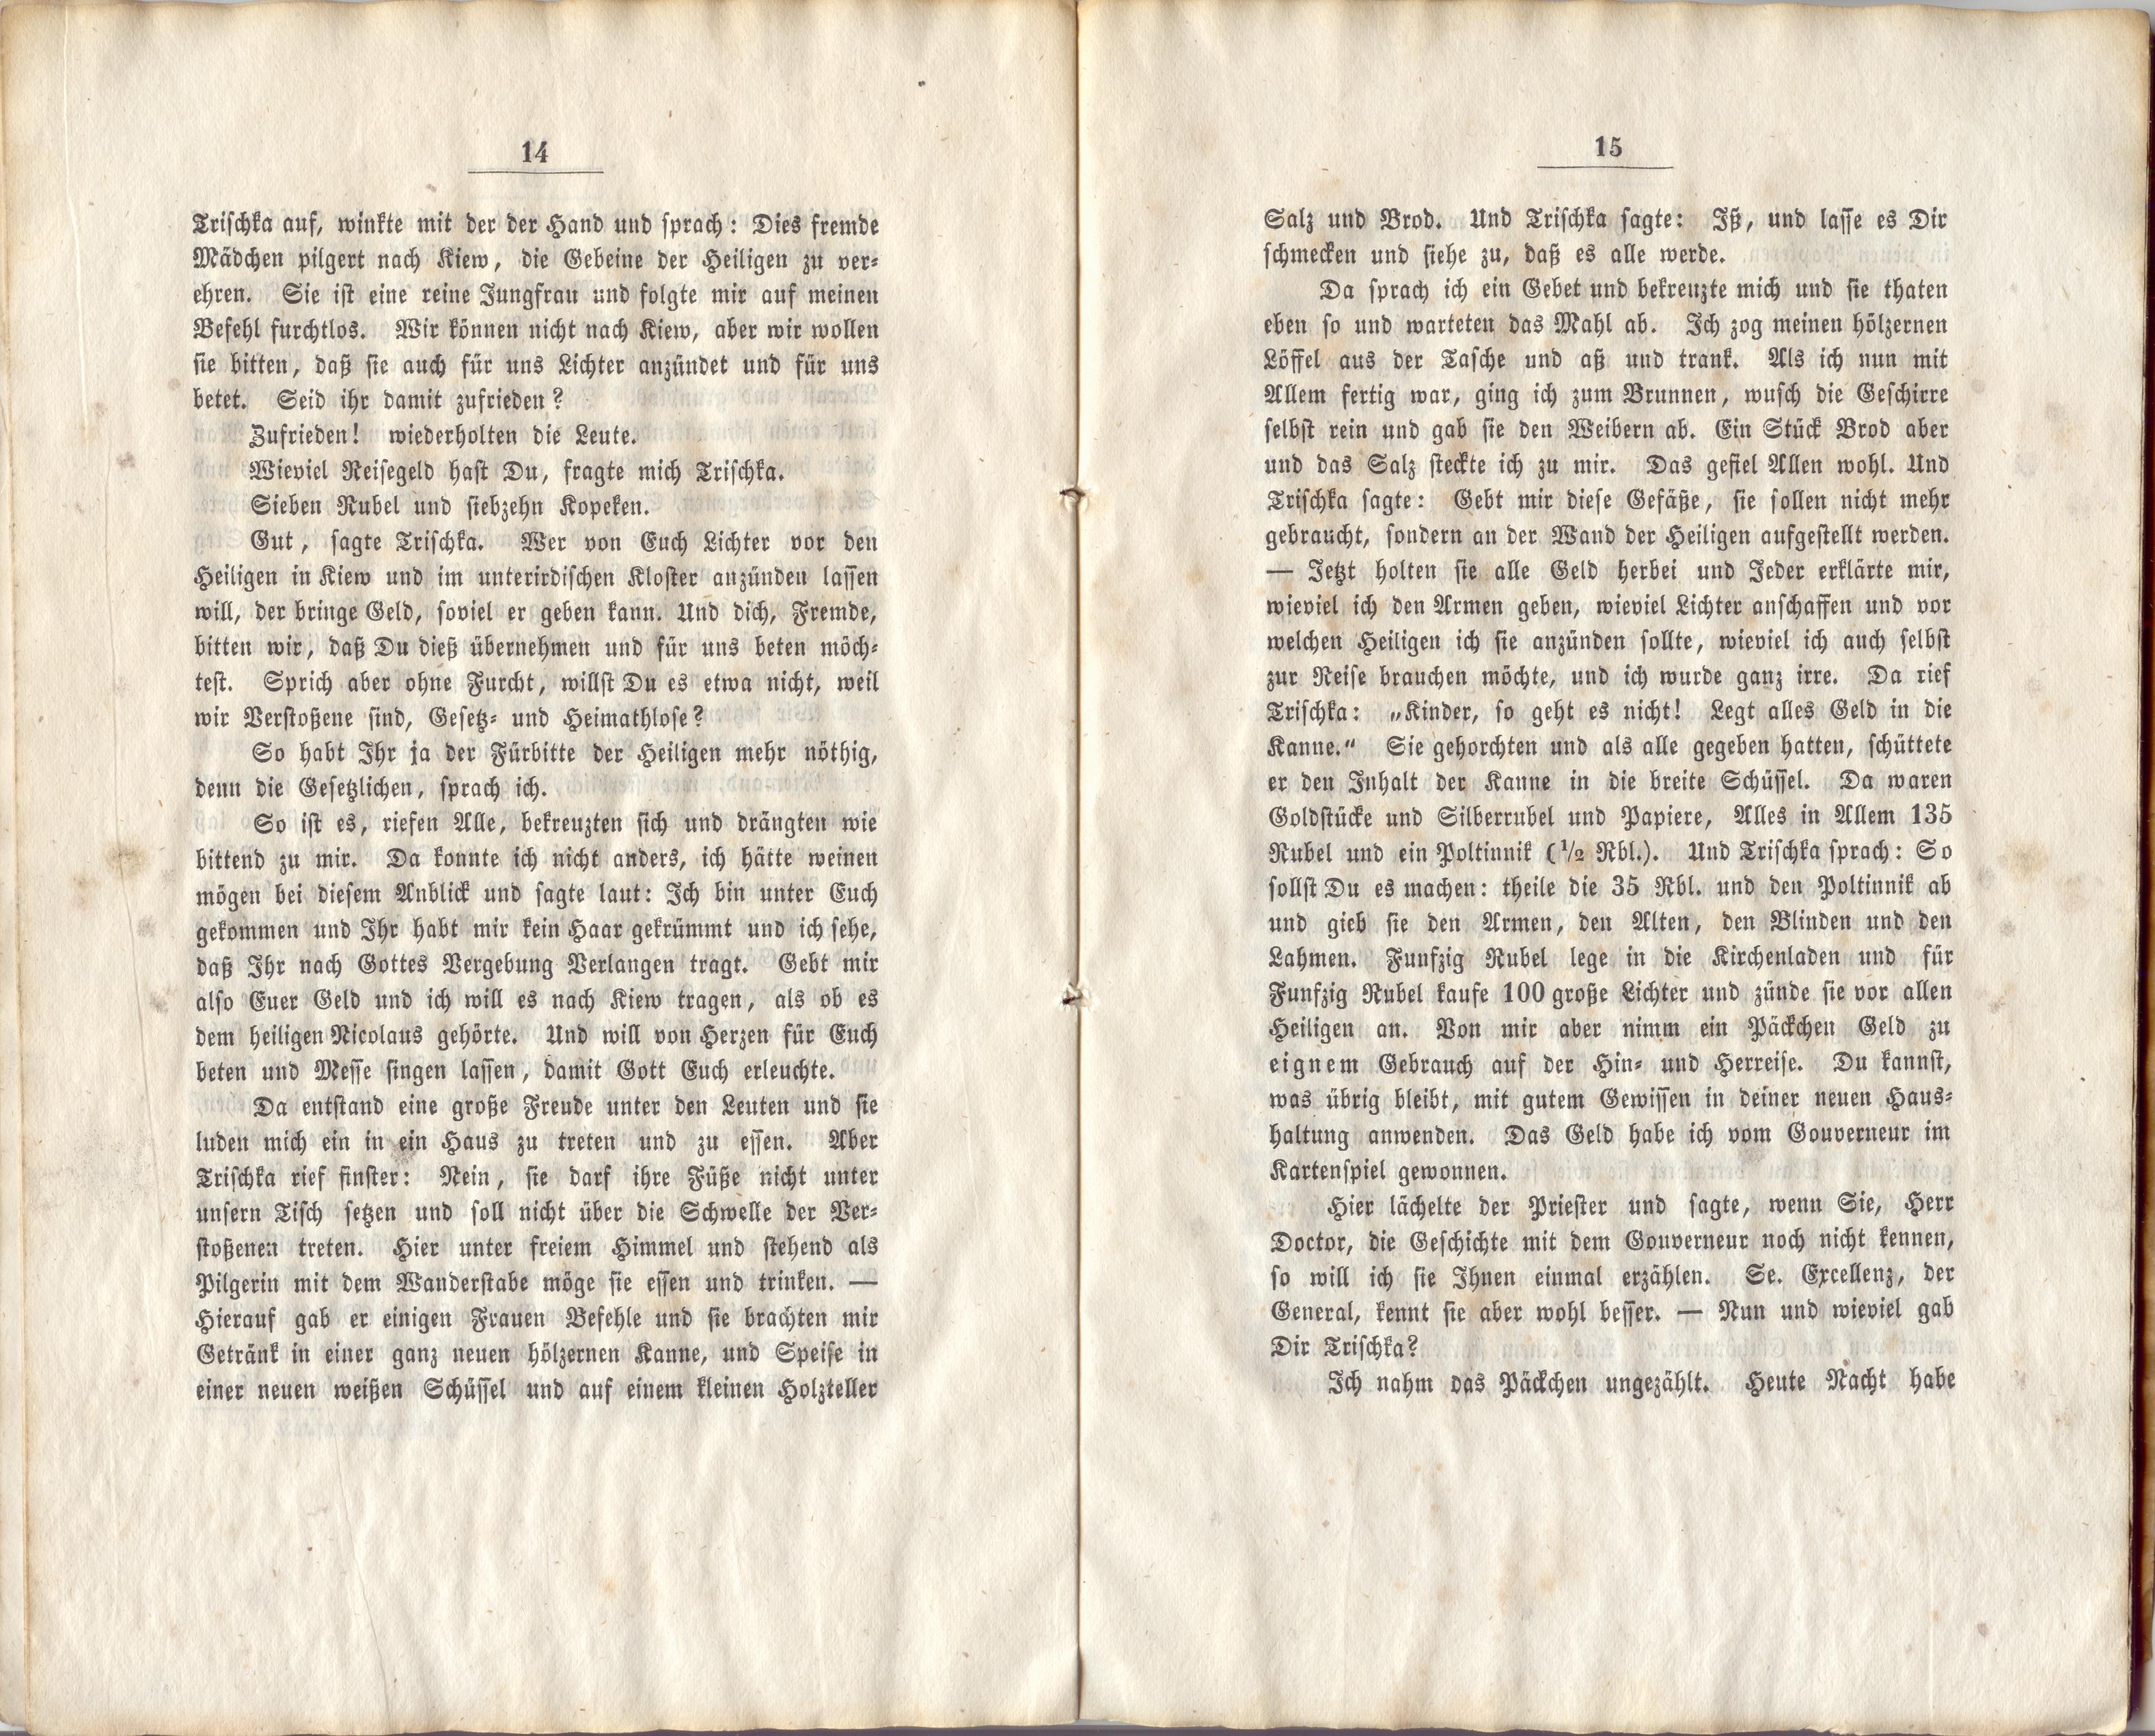 Medicinische Dorfgeschichten (1860) | 25. (14-15) Main body of text